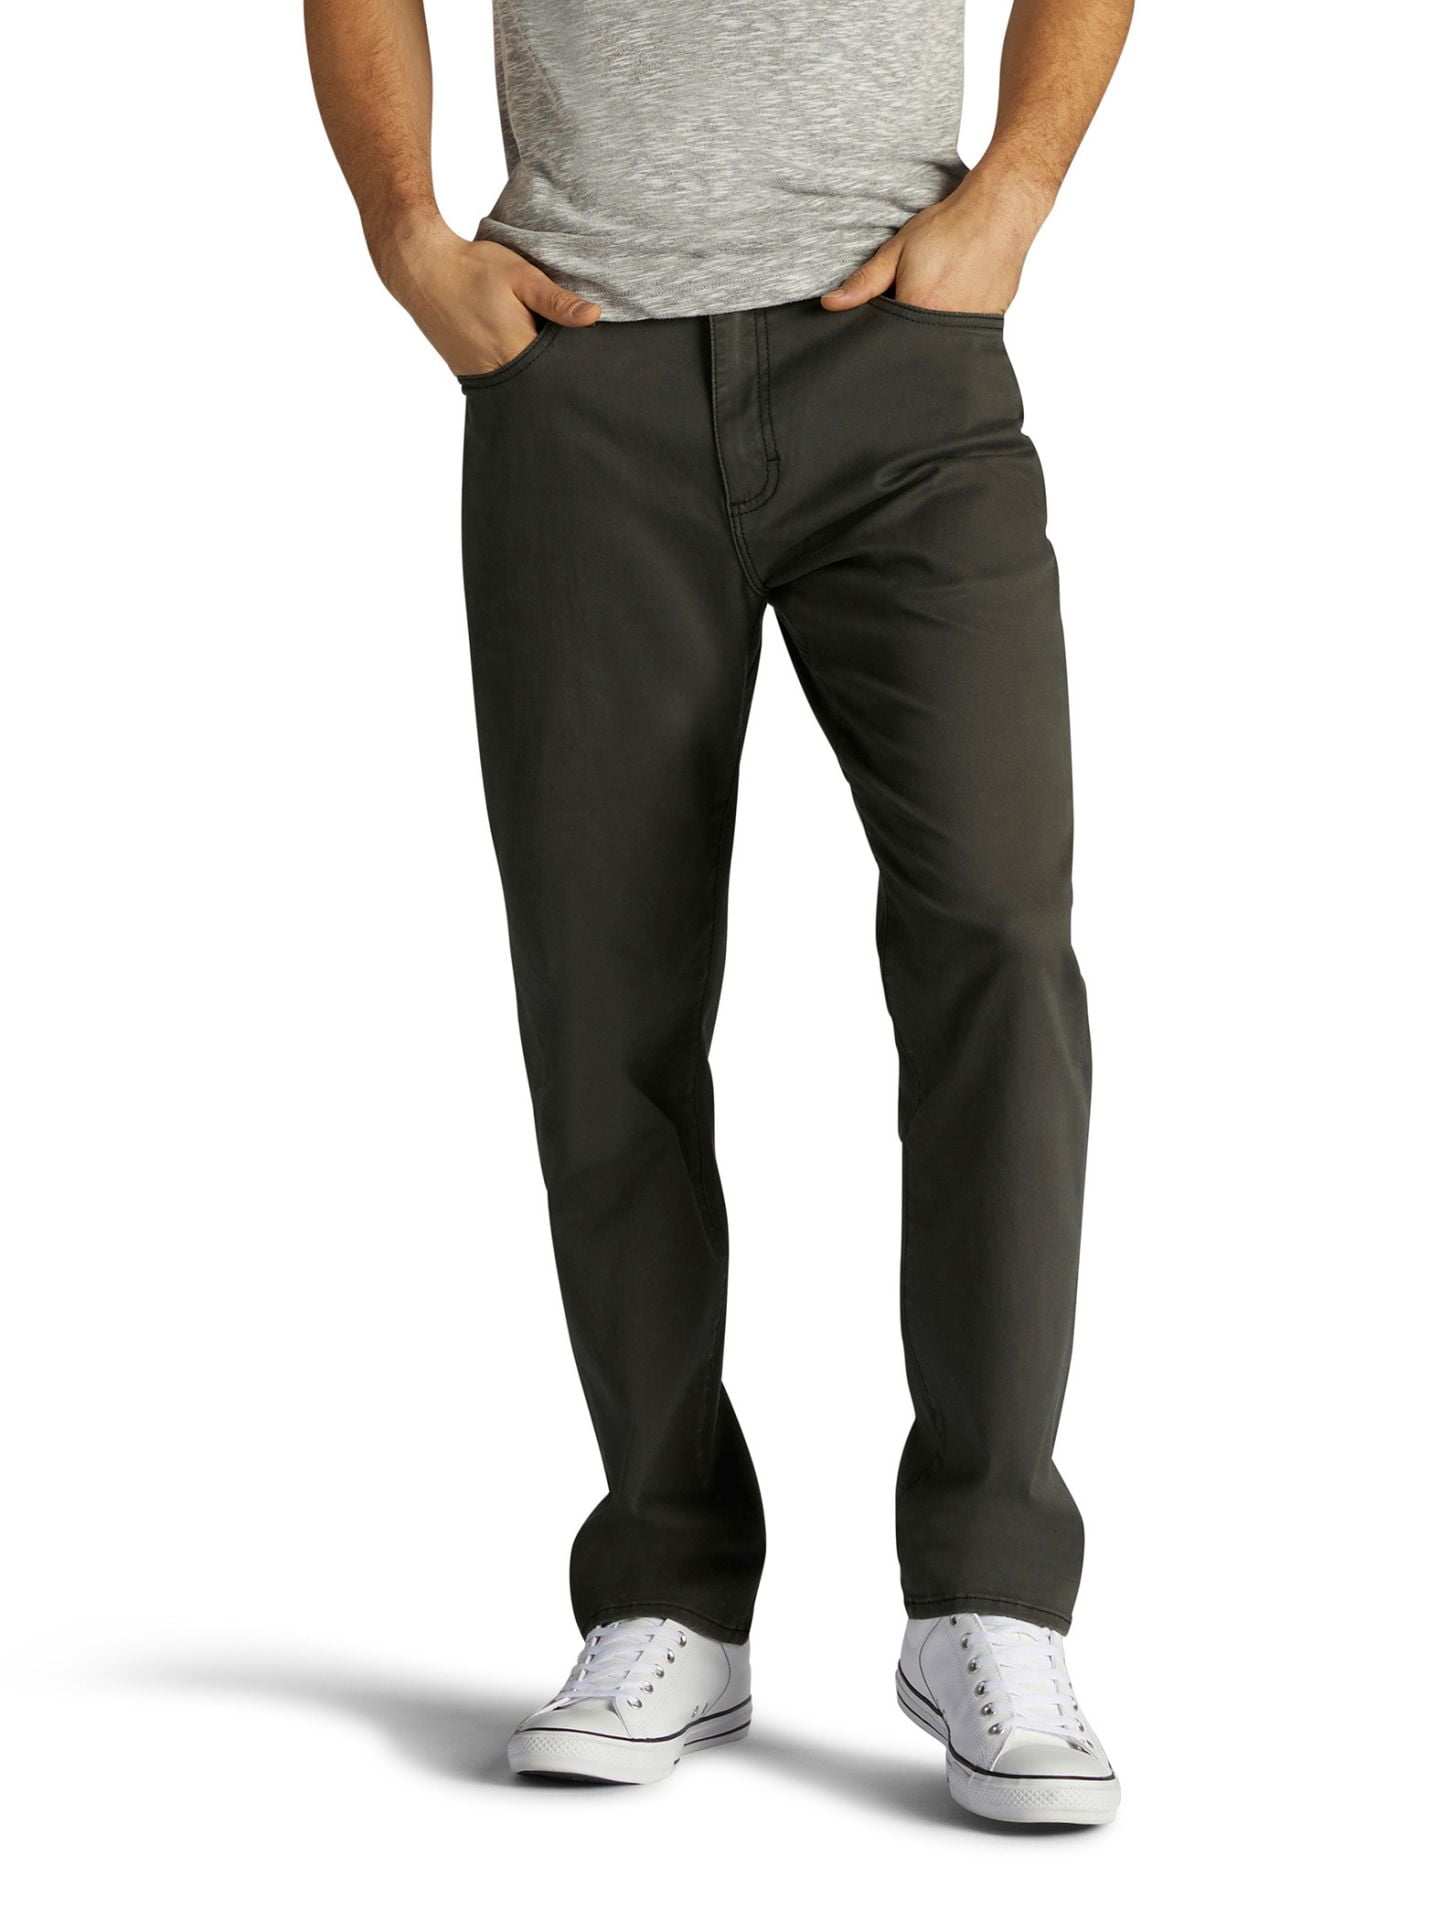 Lee Men's Extreme Motion Athletic Fit Jeans - Dark Grey, Dark Grey ...